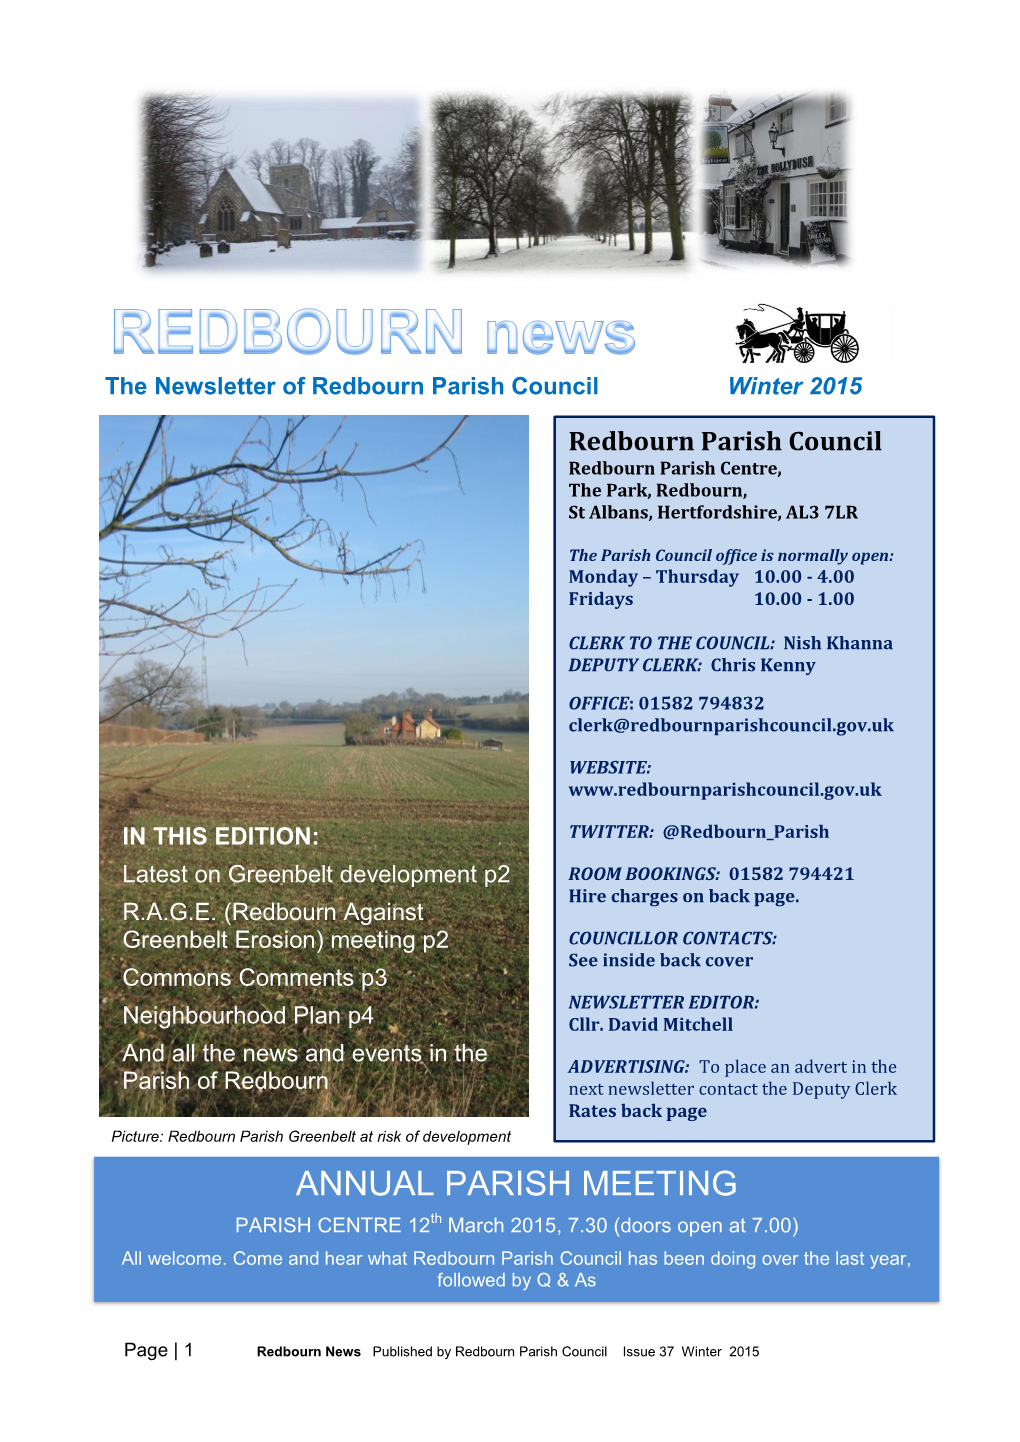 Issue 37 of Redbourn News Winter 2015 Edition